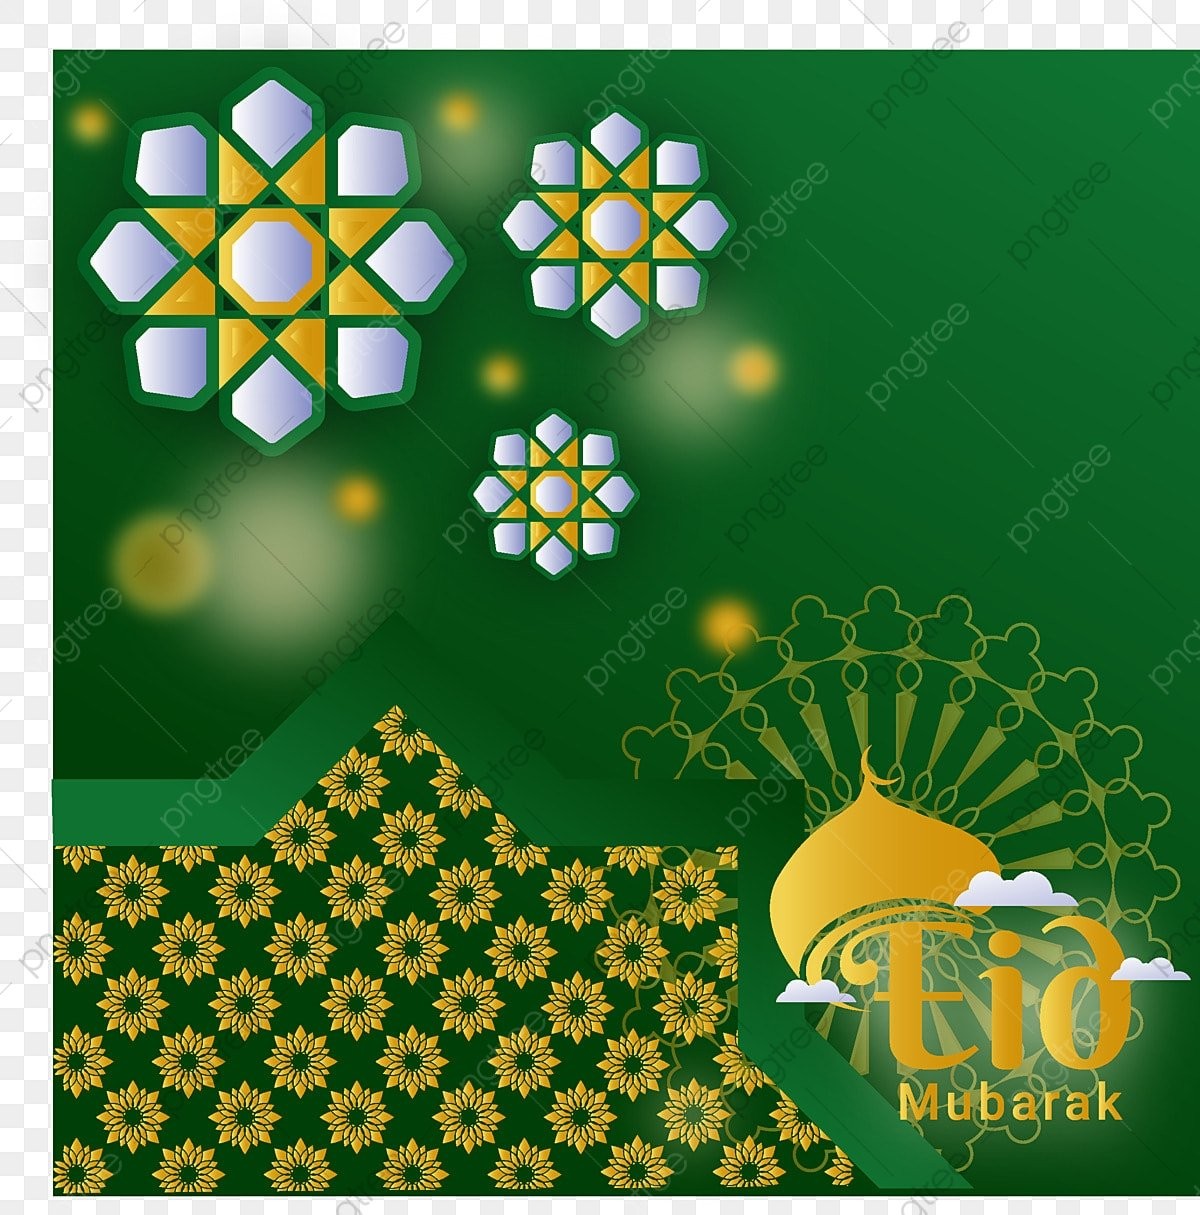 pngtree-green-eid-mubarak-greeting-card-png-image_7689189.png